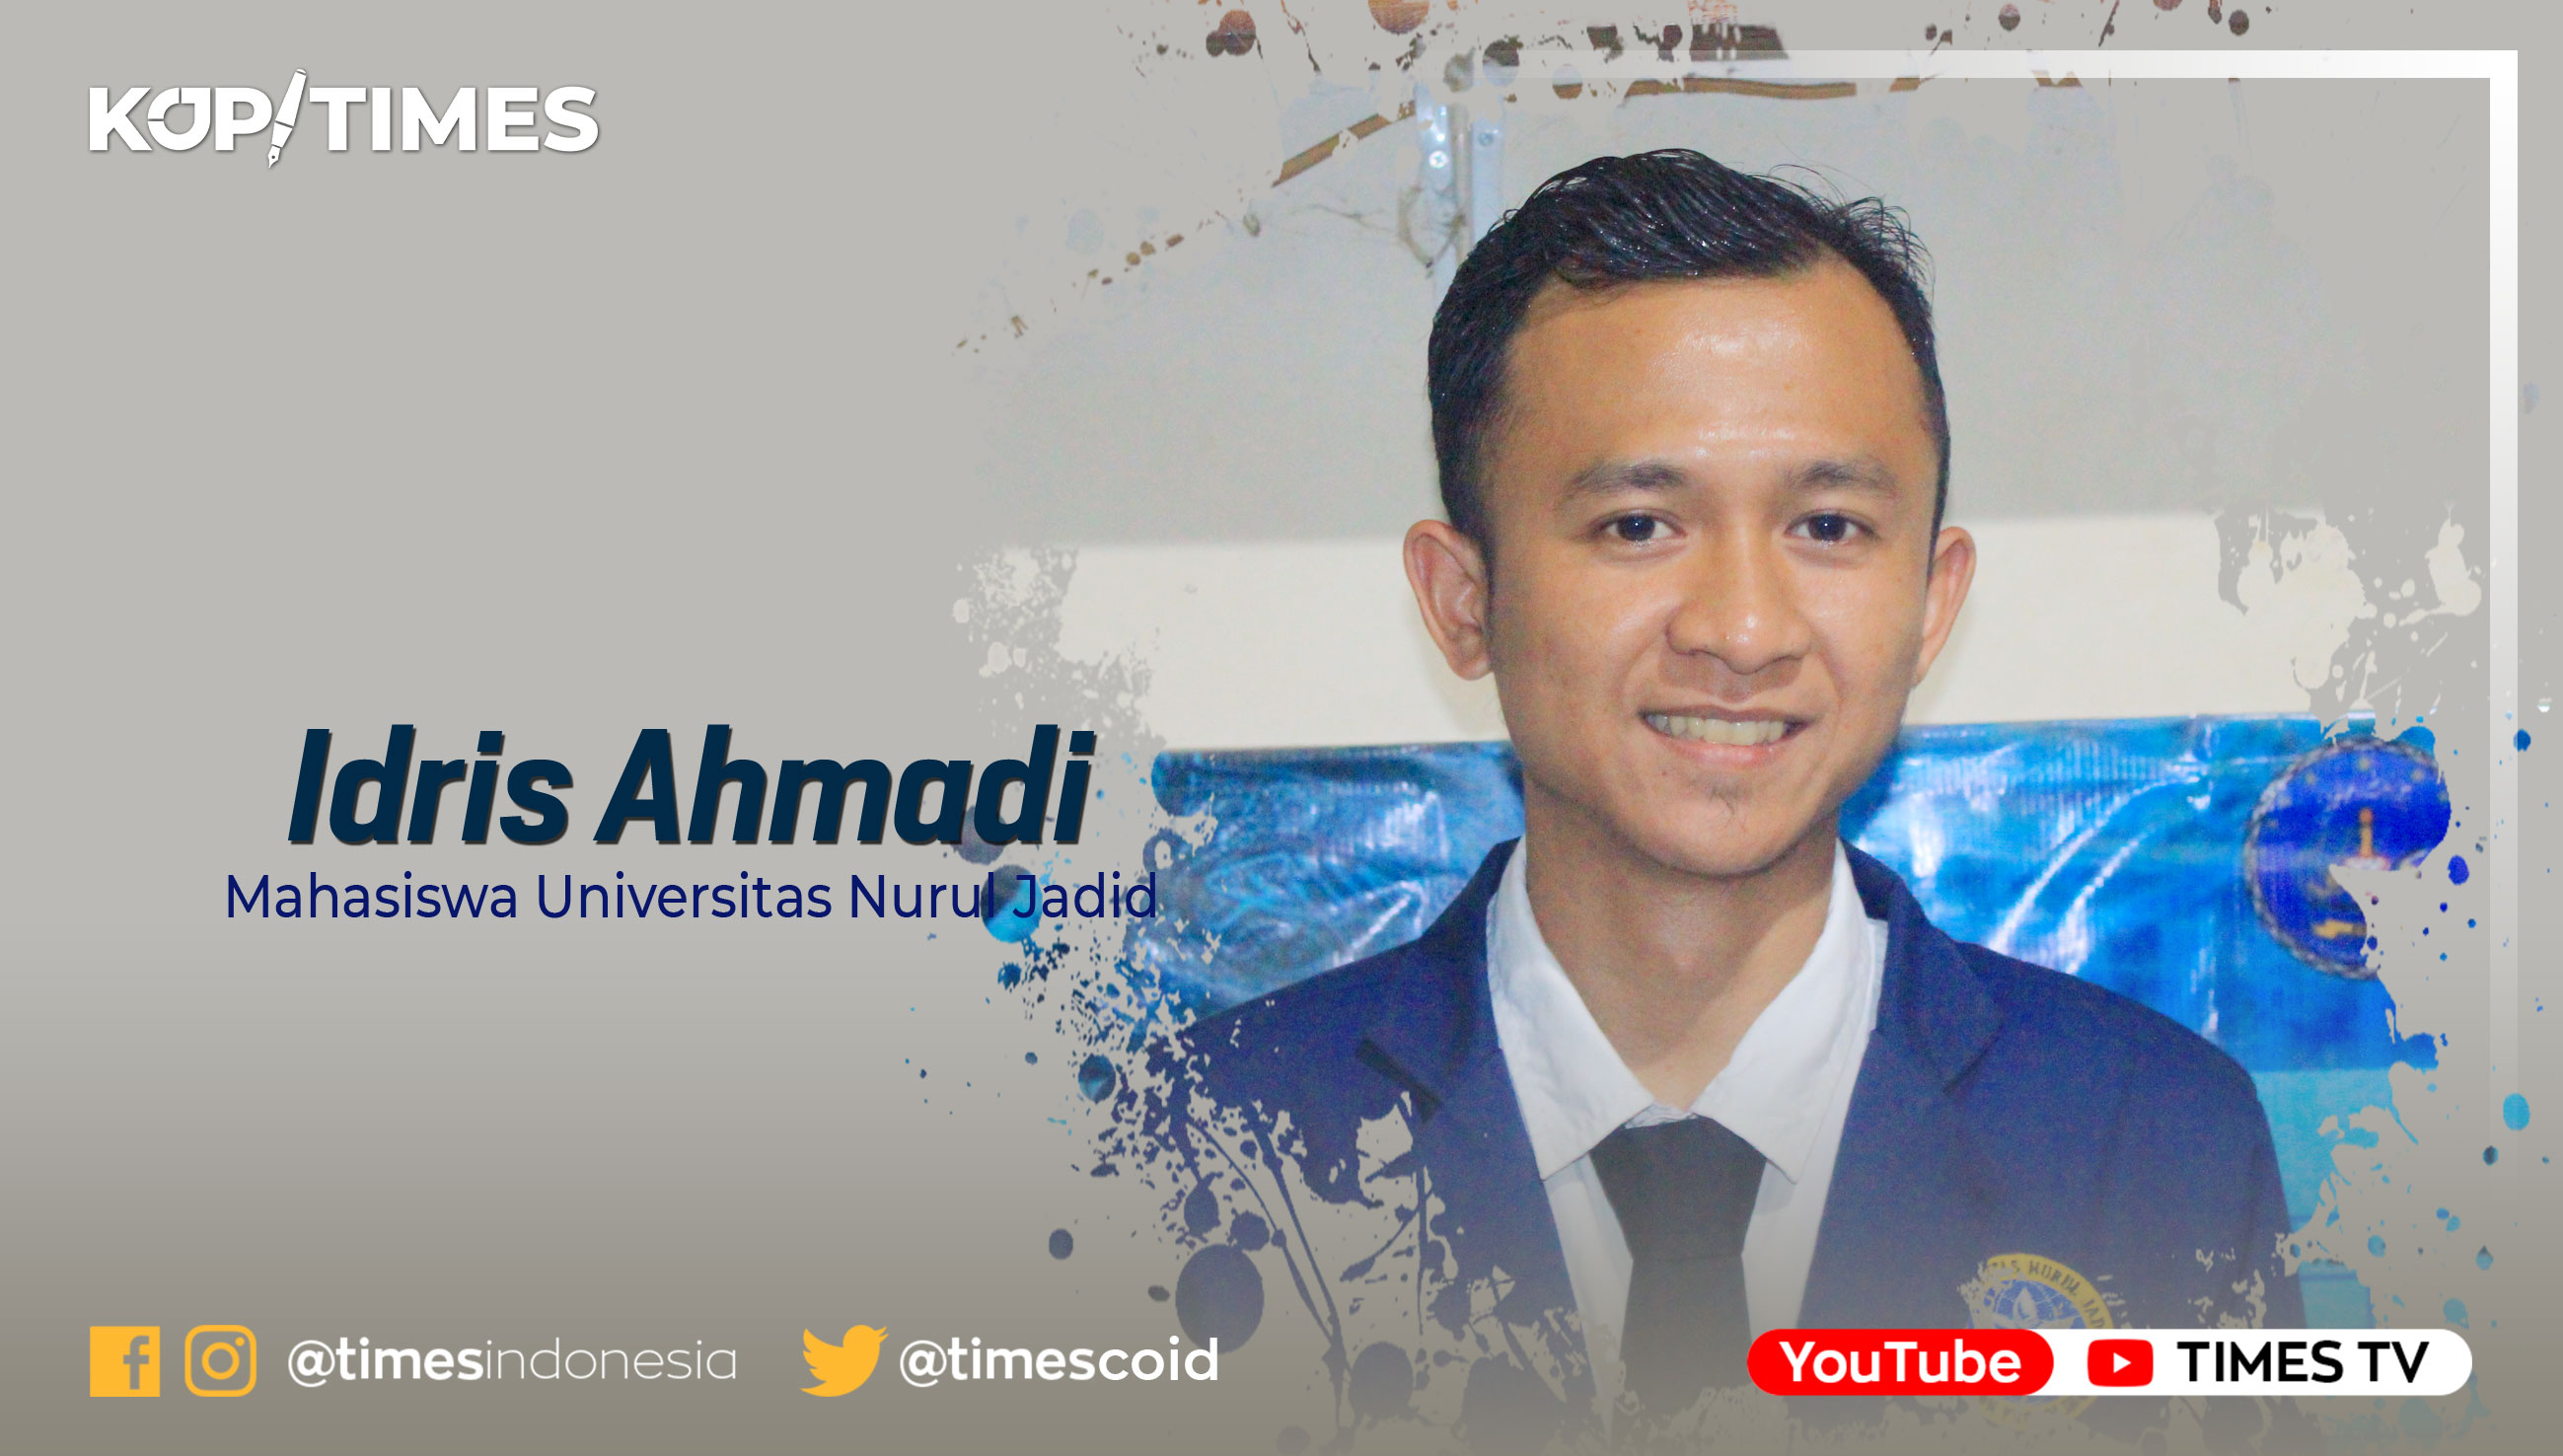 Idris Ahmadi, Mahasiswa Universitas Nurul Jadid; Santri Aktif Pondok Pesantren Nurul Jadid.